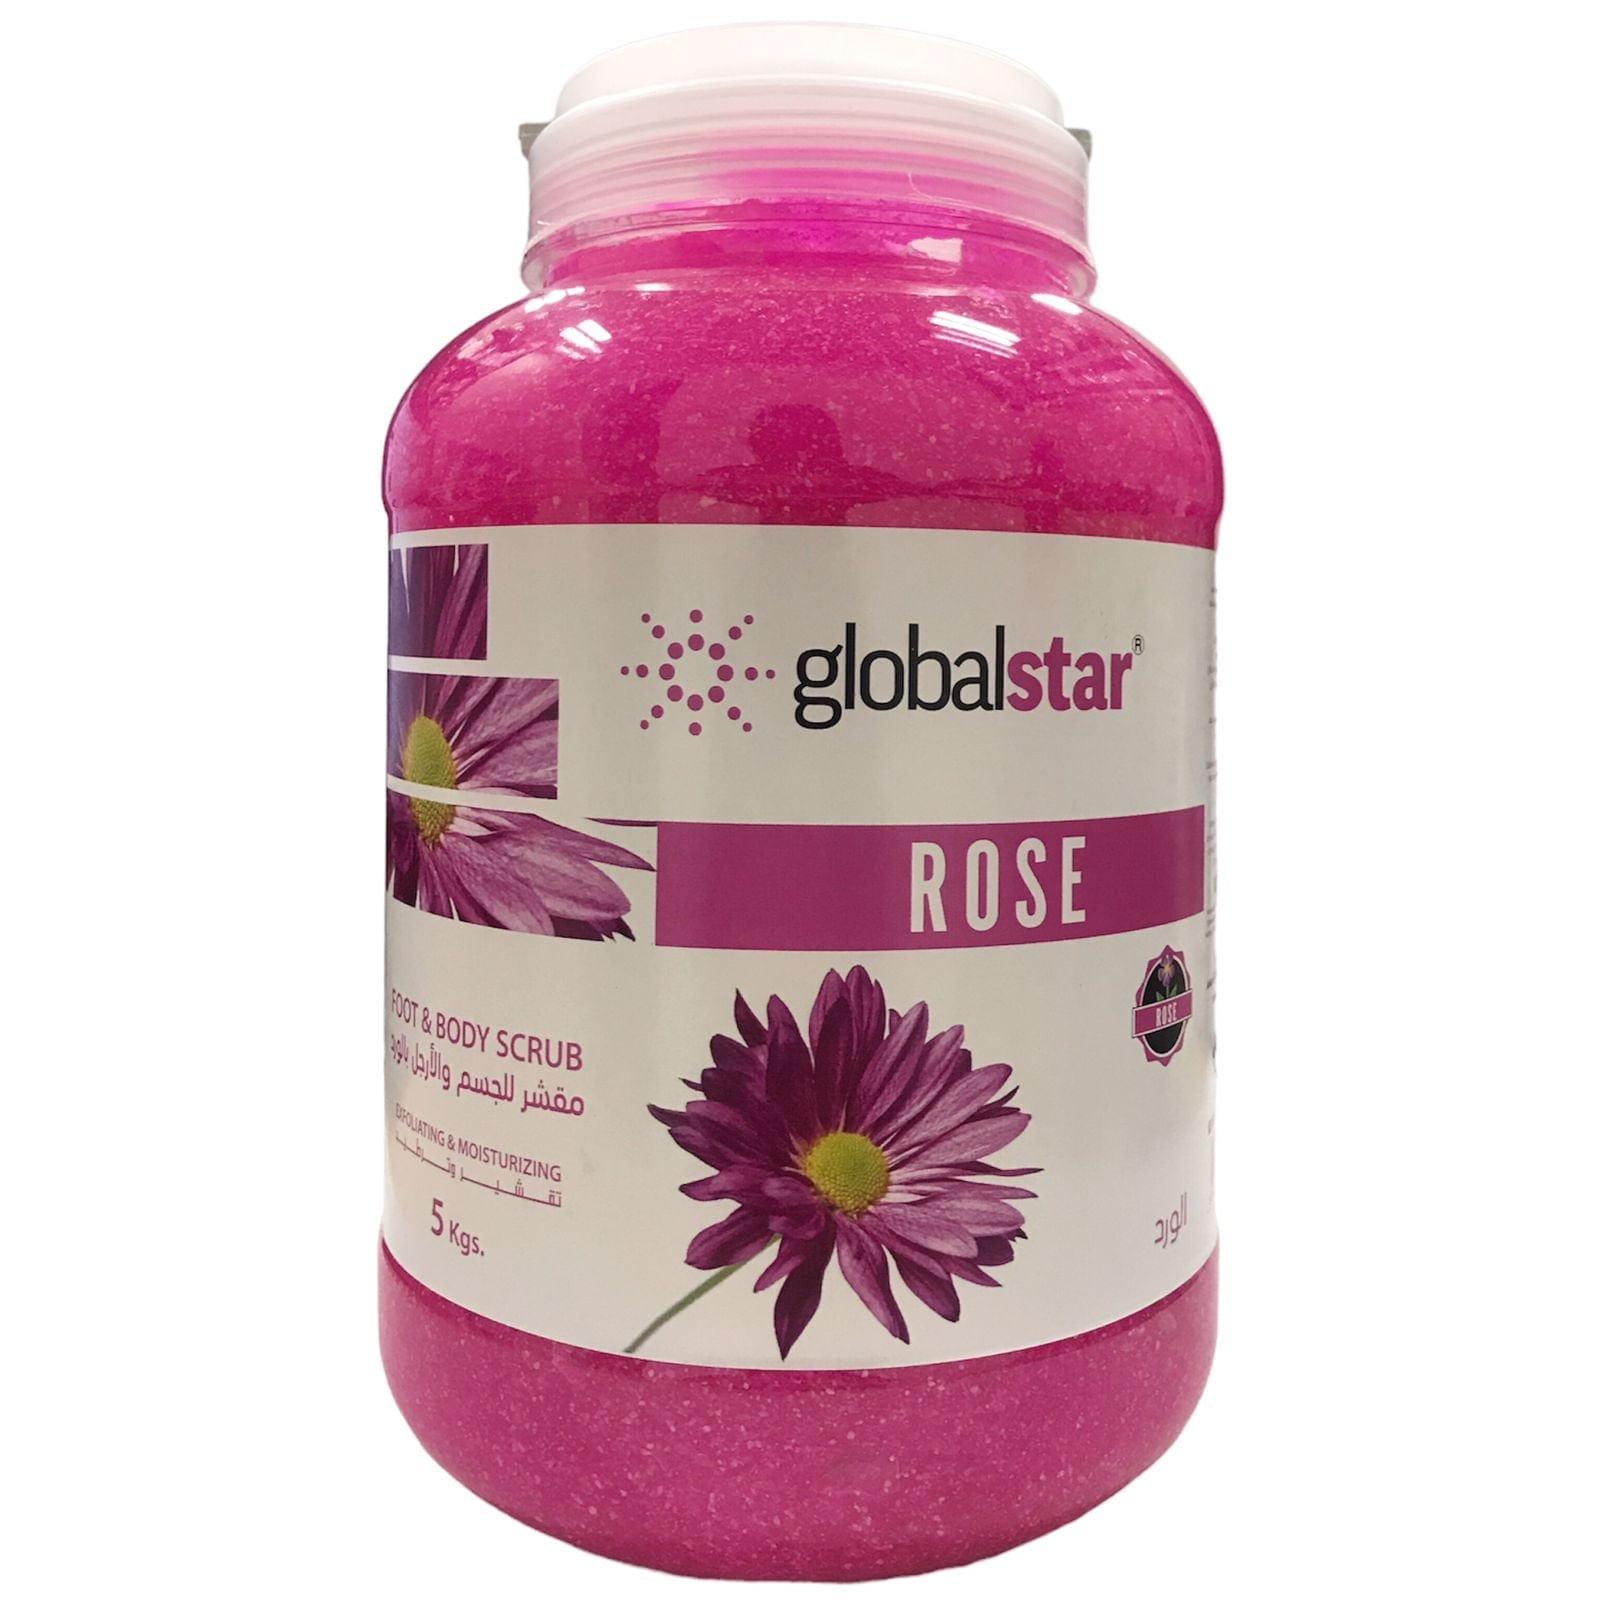 Globalstar Exfoliating Foot And Body Scrub Rose 5kg